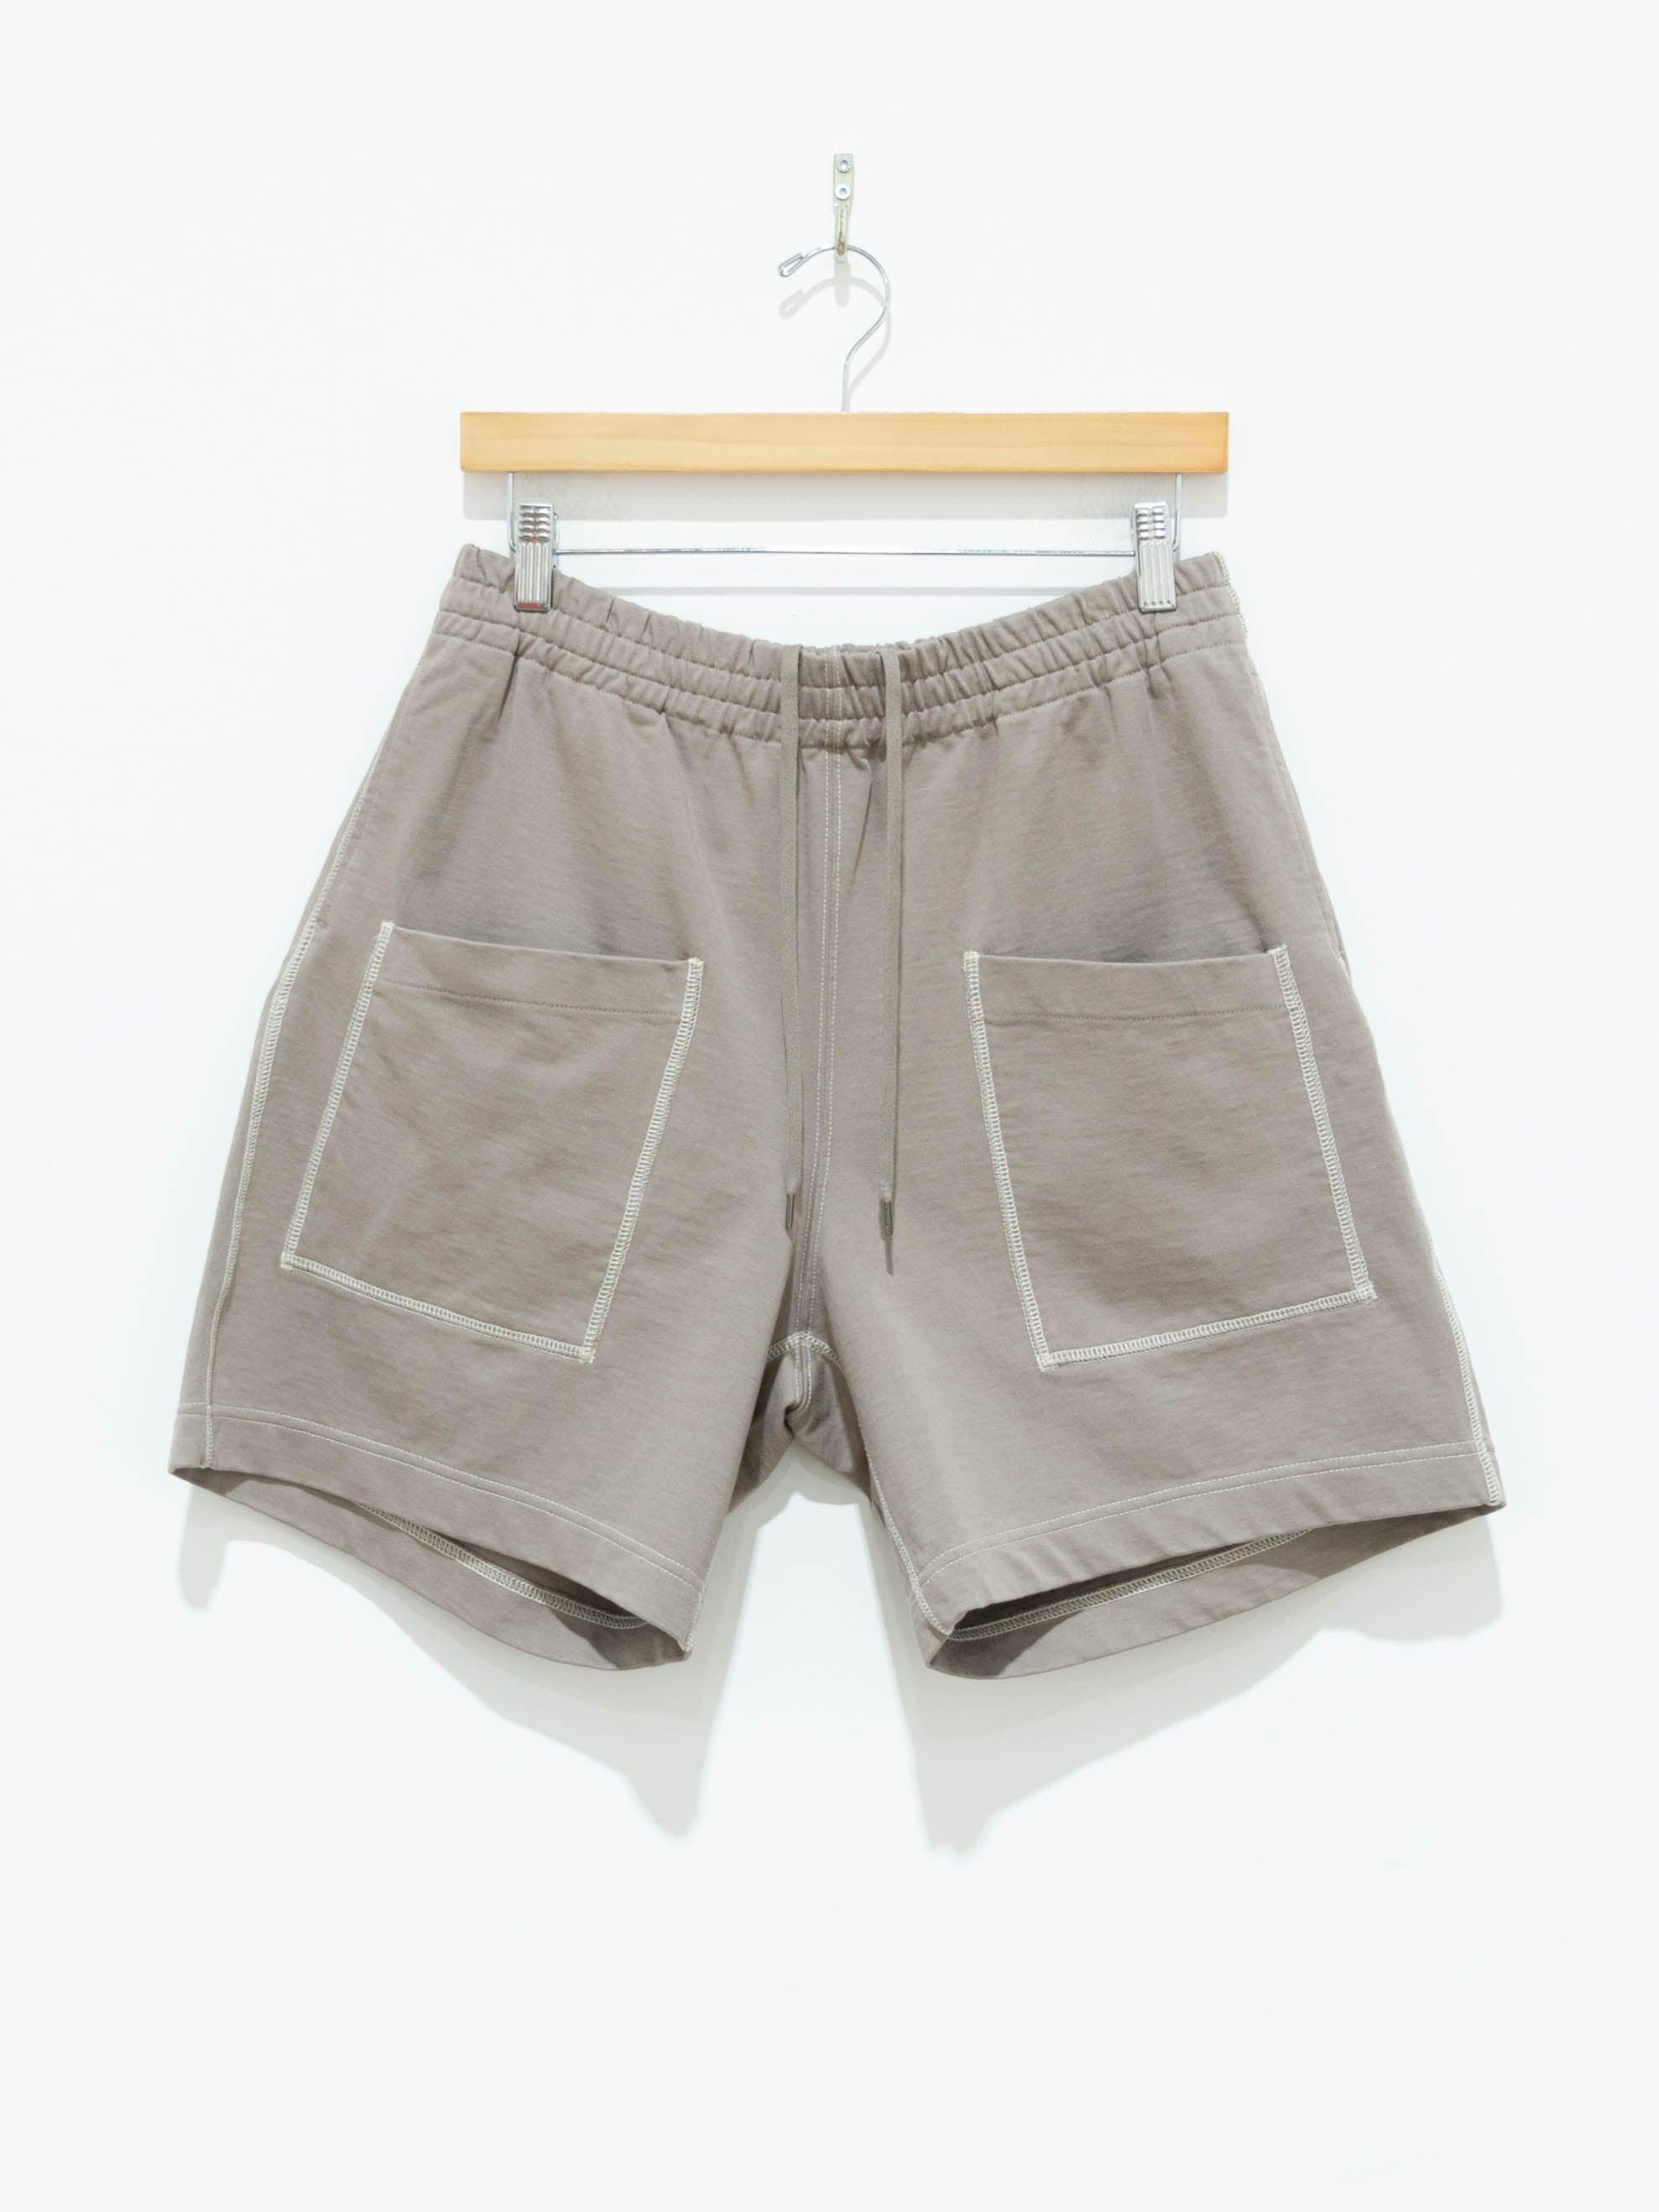 Namu Shop - Auralee High Density Organic Cotton Jersey Shorts - Gray Beige